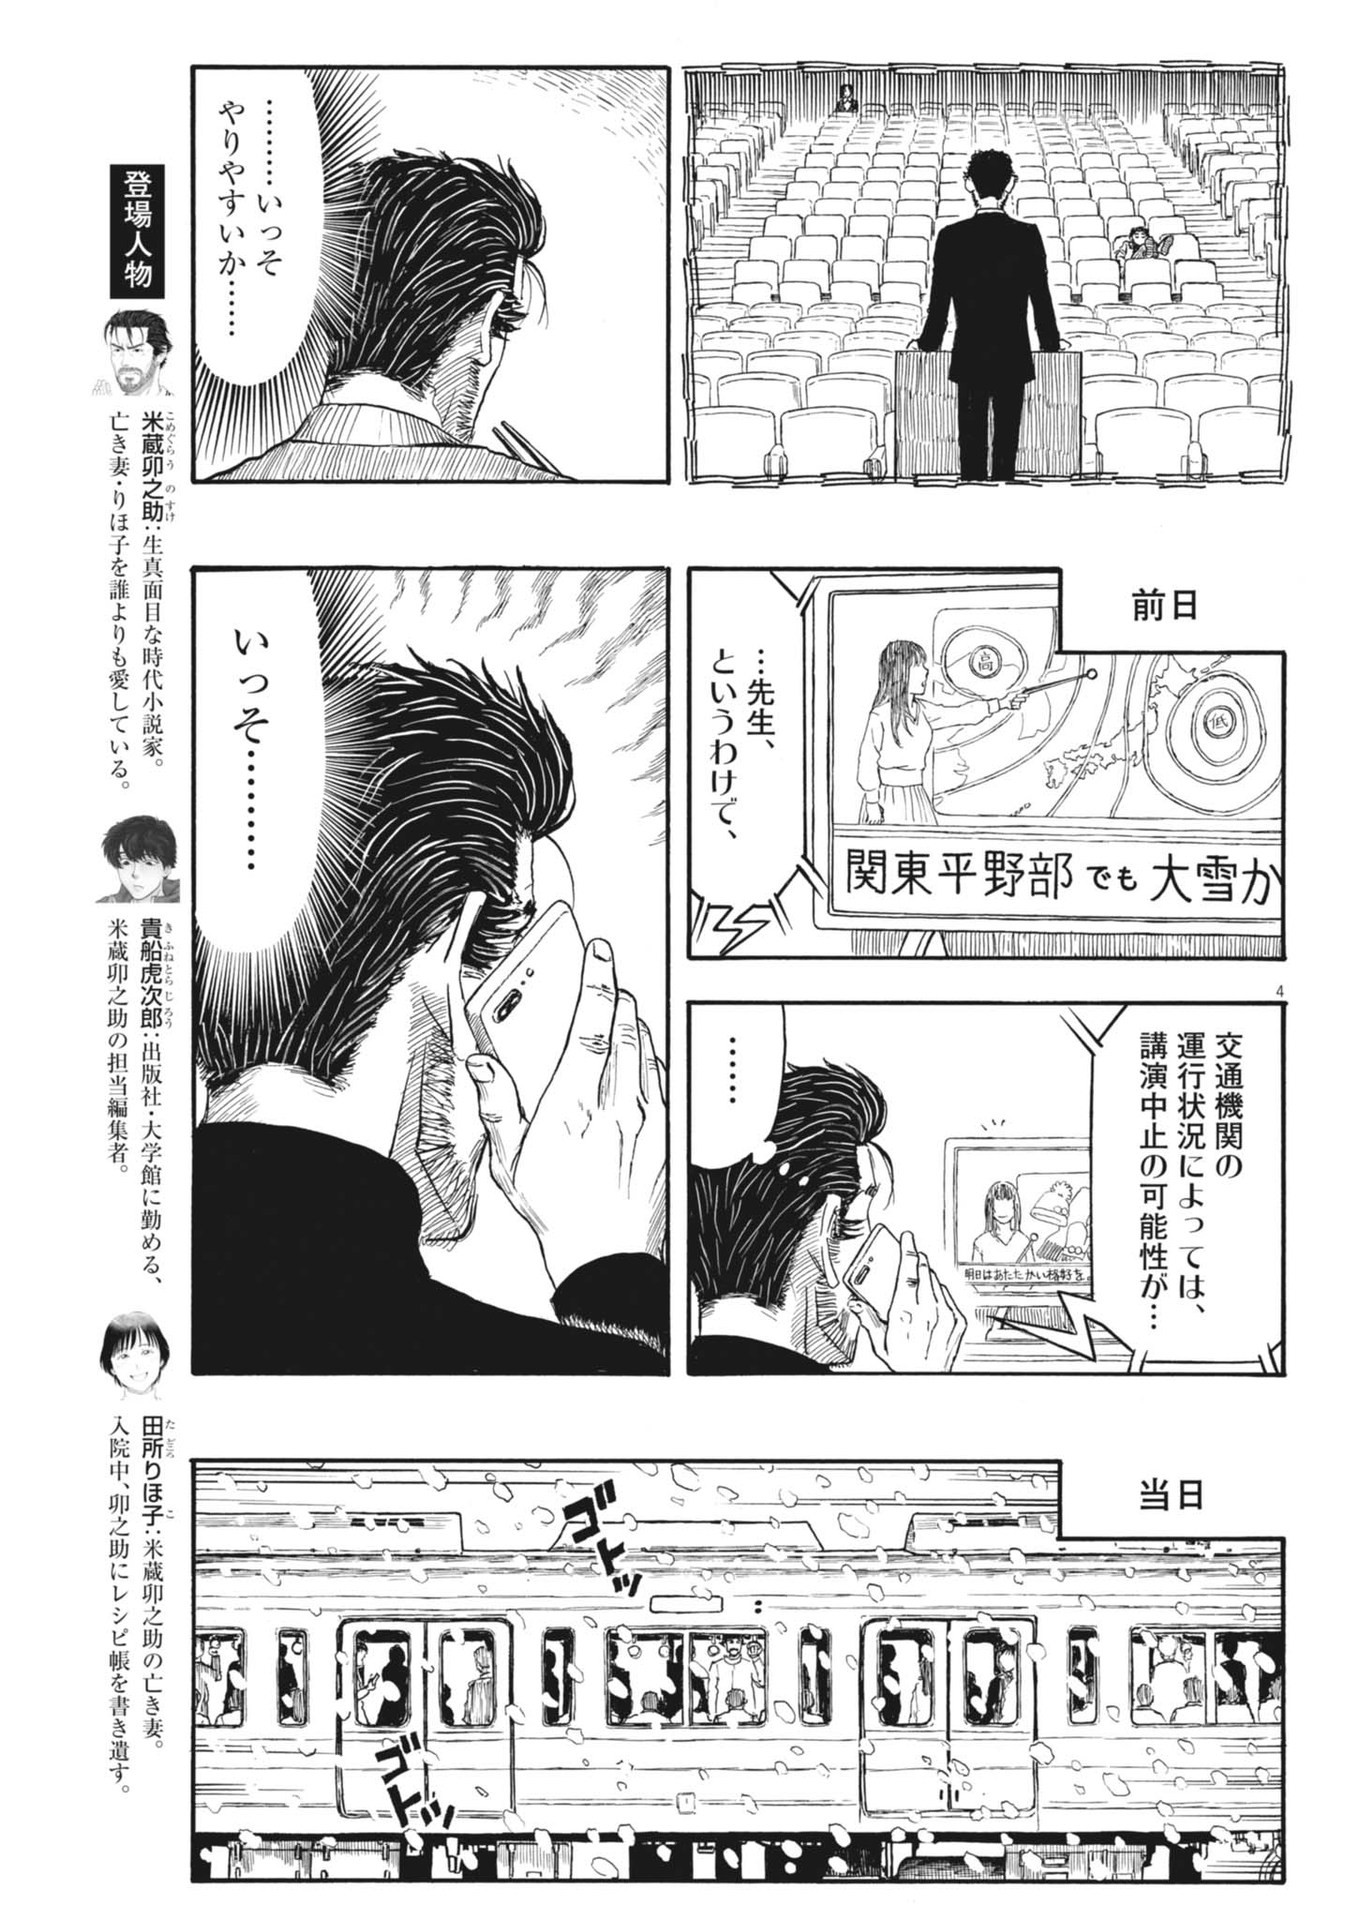 Komegura Fuufu no Recipe-chou - Chapter 40 - Page 4